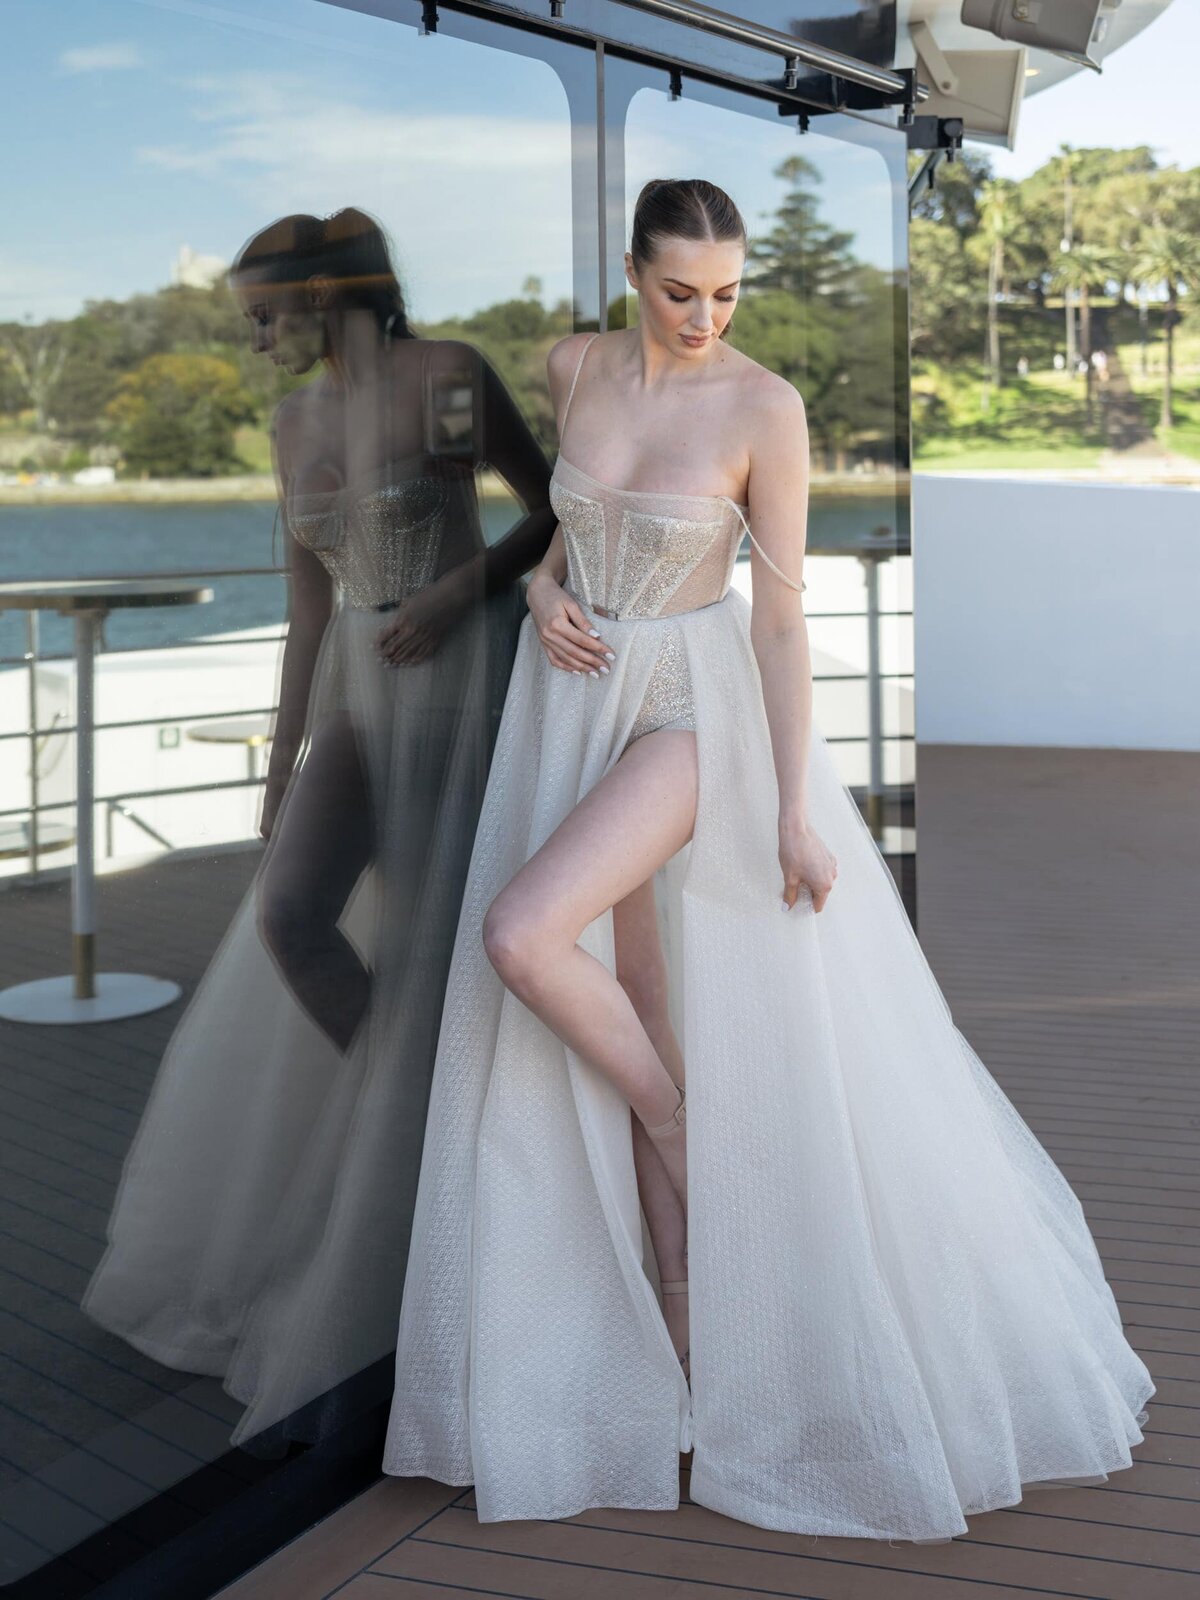 Muse by Berta wedding dress - Serenity Photography - 119